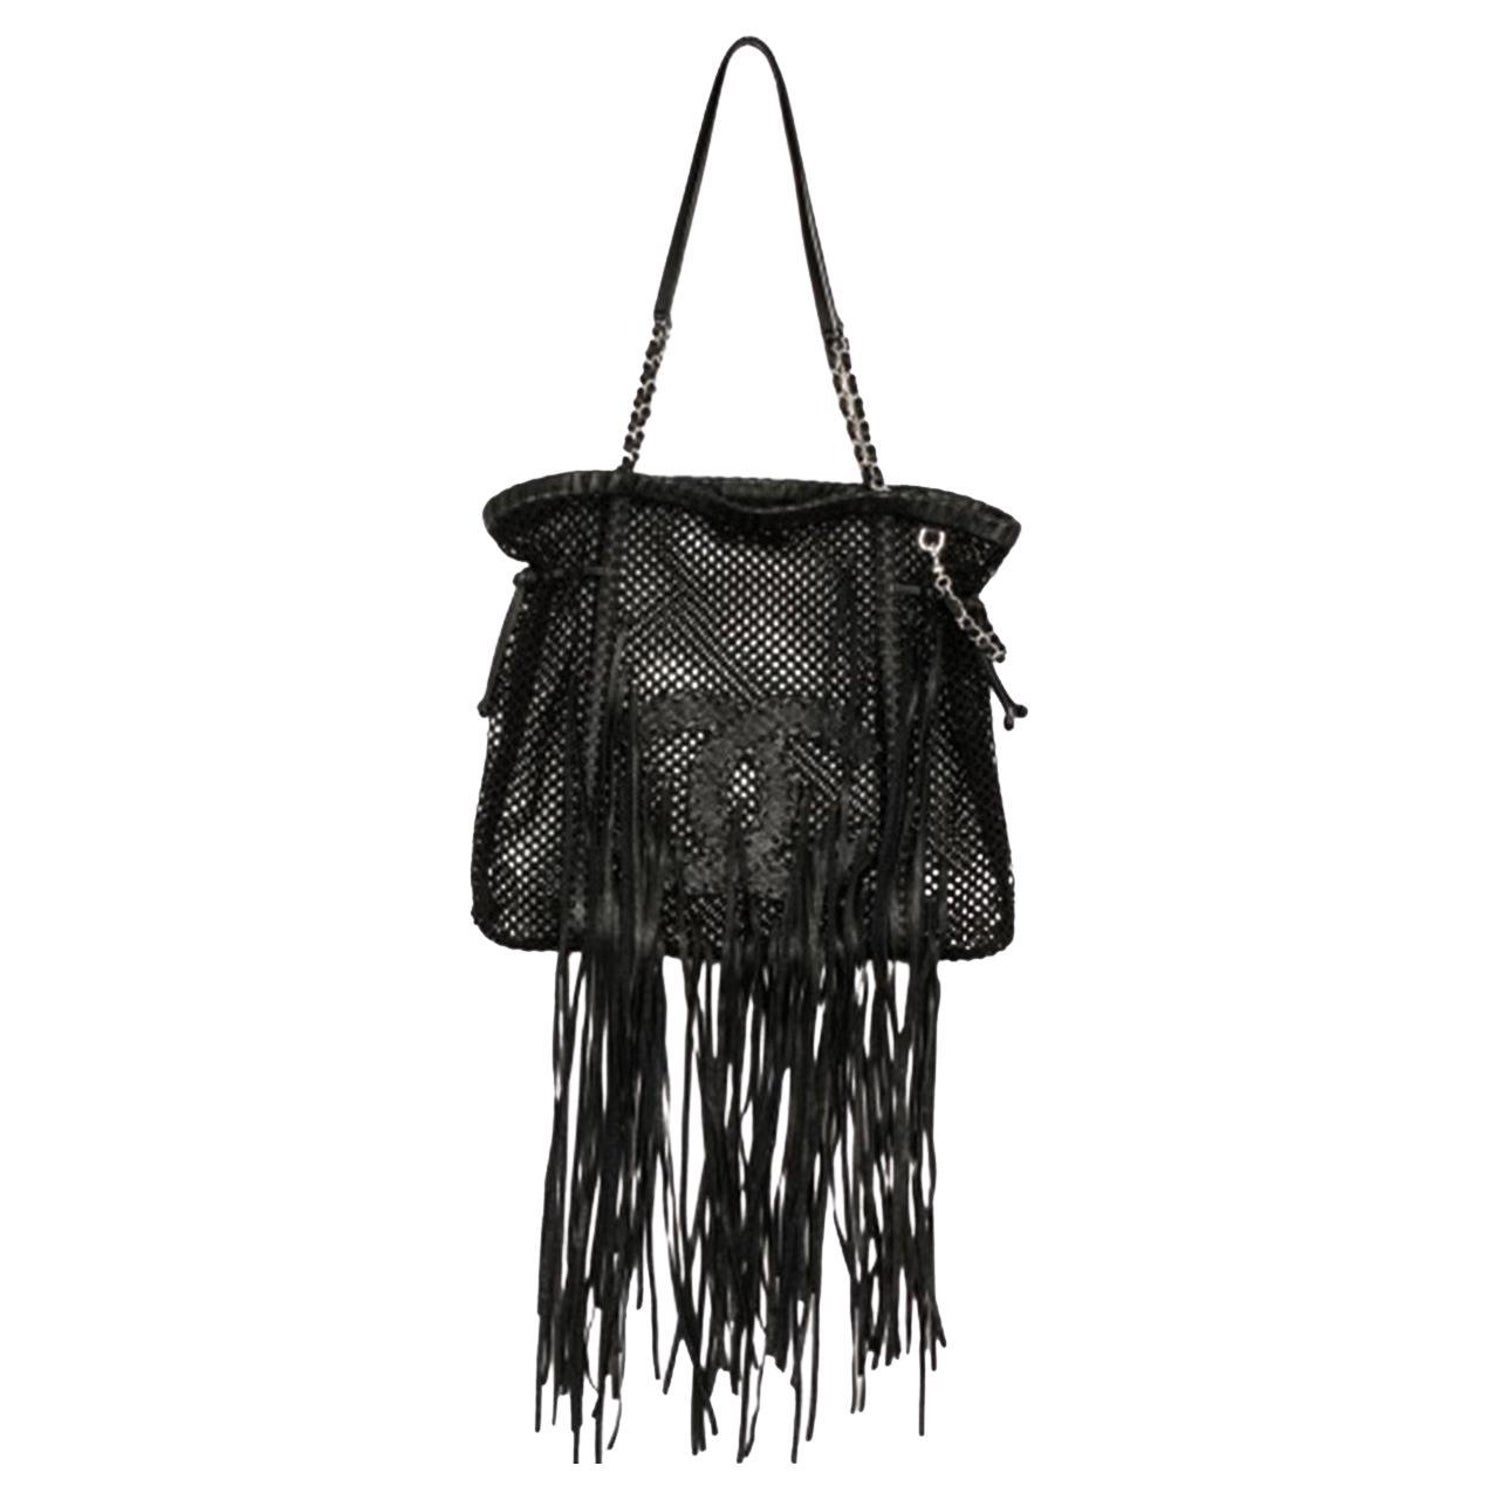 Chanel La Madrague Tote - Black Totes, Handbags - CHA639968